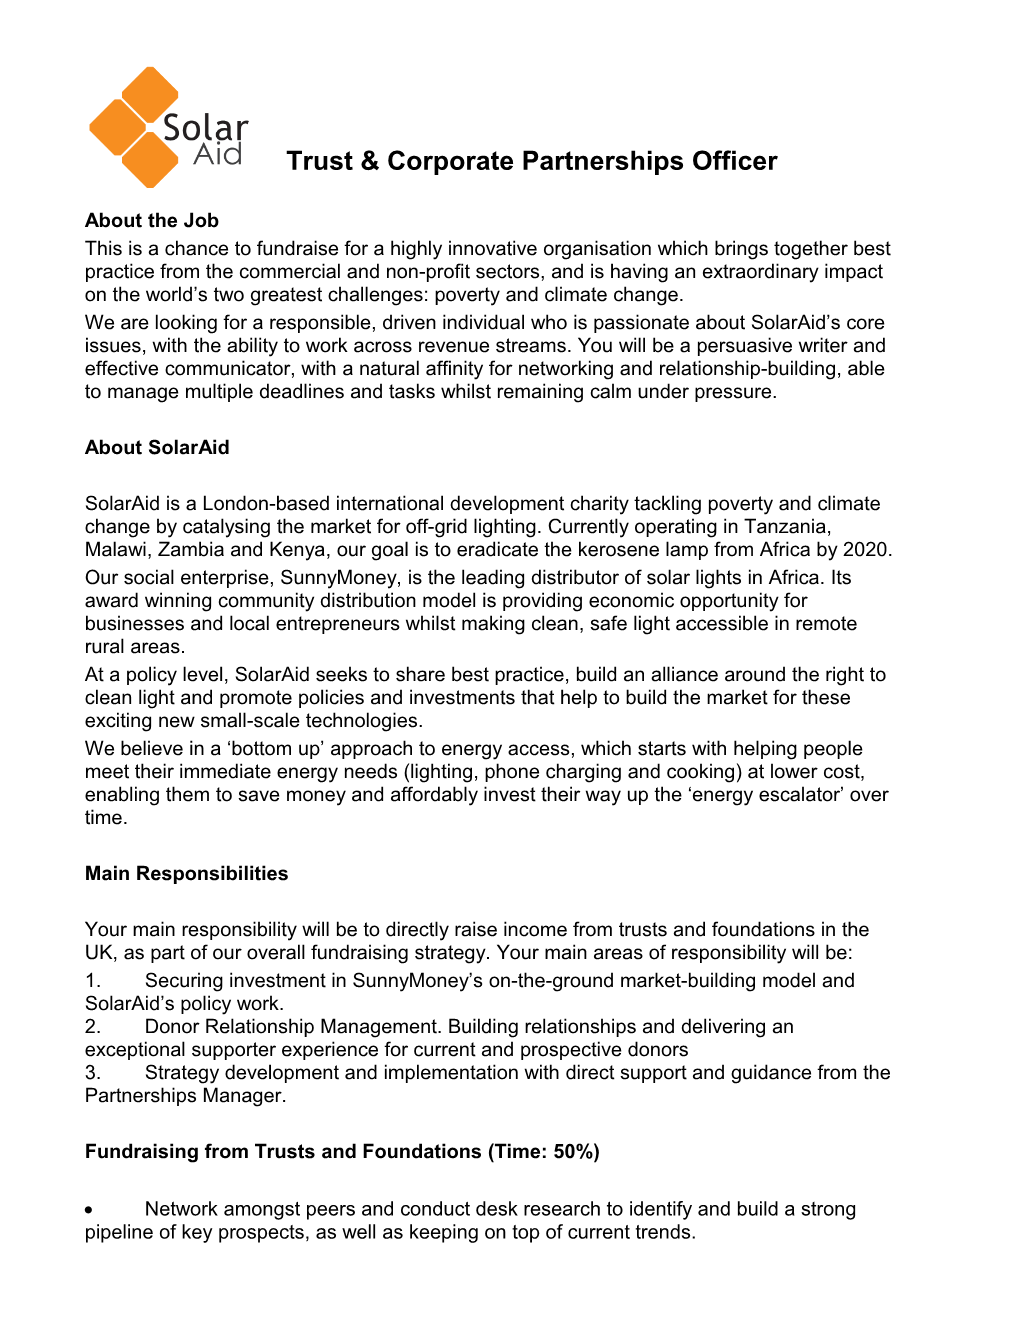 Trust & Corporate Partnershipsofficer